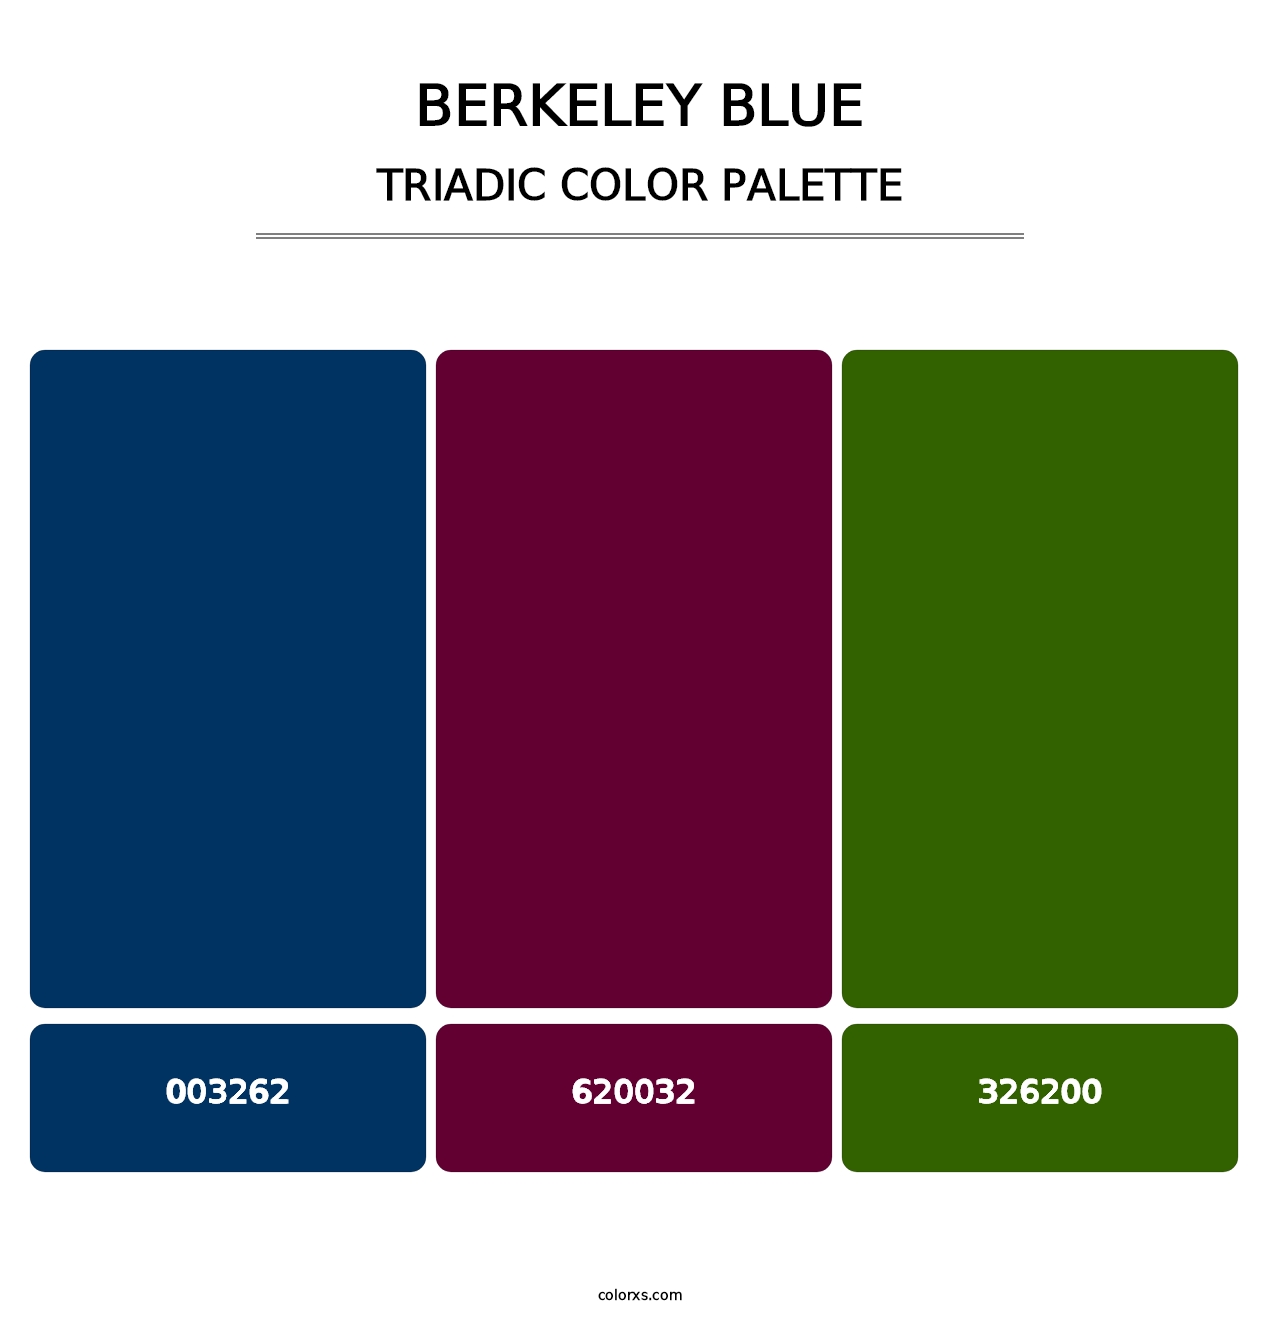 Berkeley Blue - Triadic Color Palette